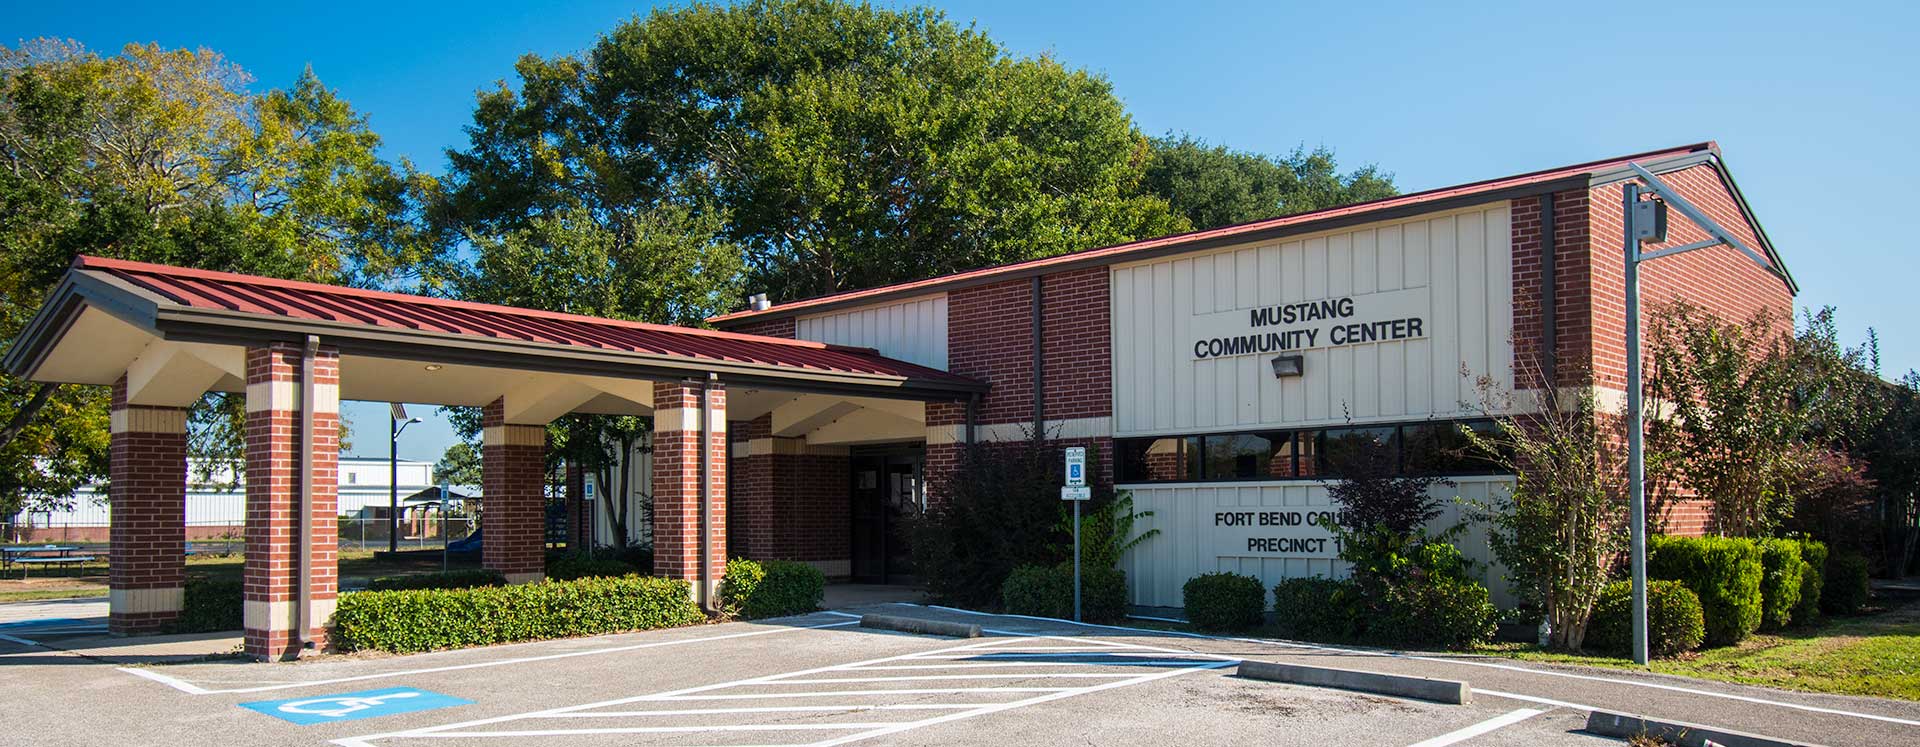 Mustang Community Center